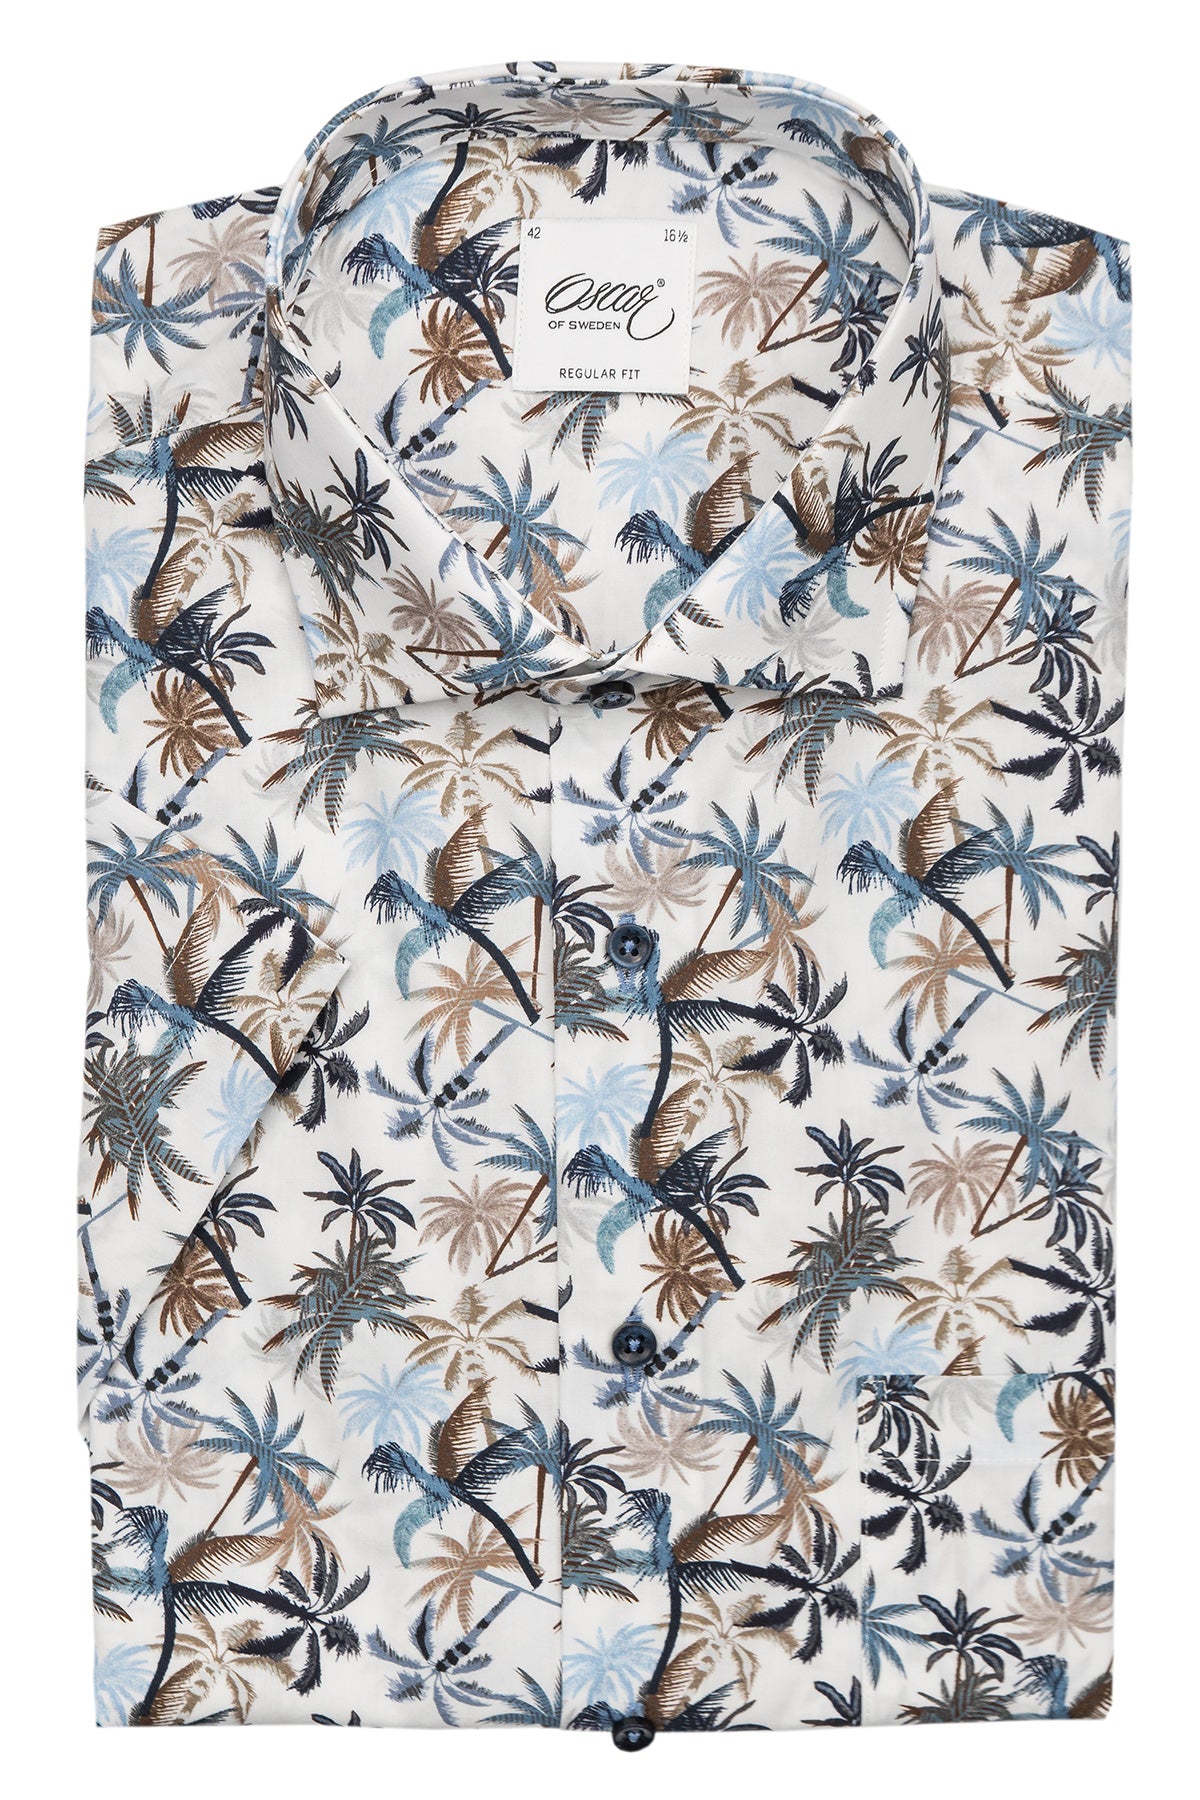 White palm printed short sleeve regular fit shirt